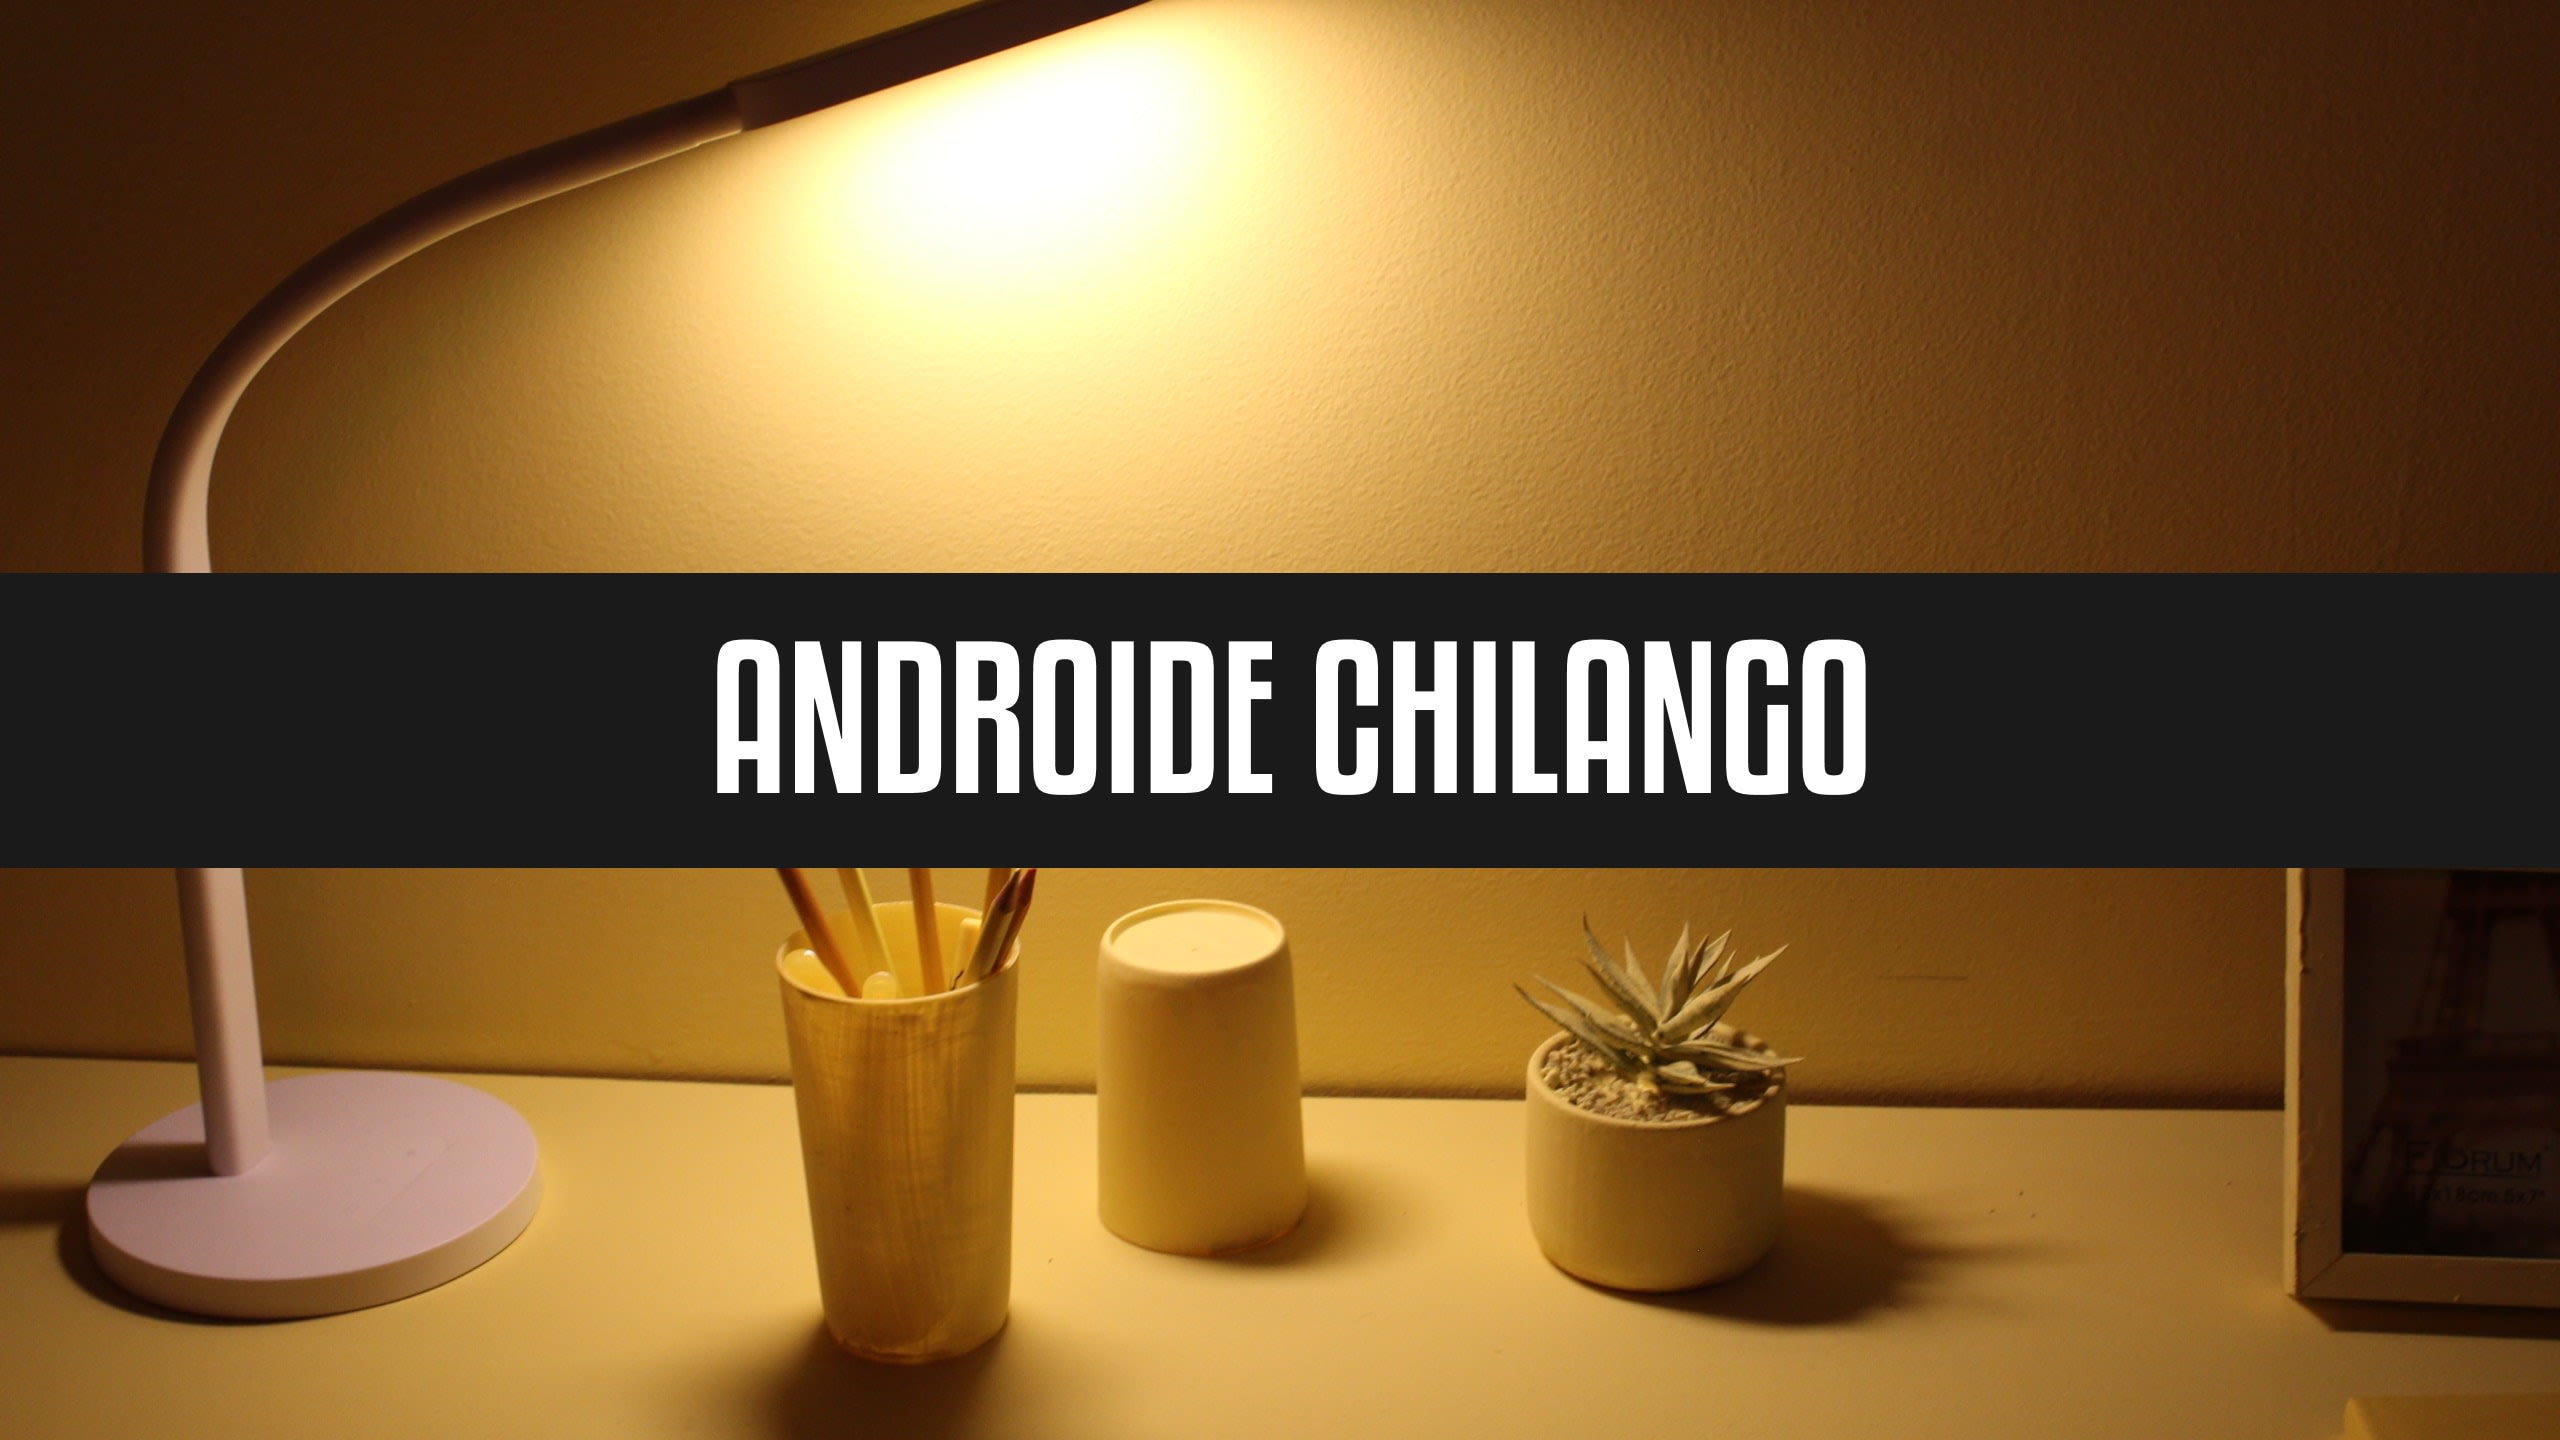 Androide Chilango